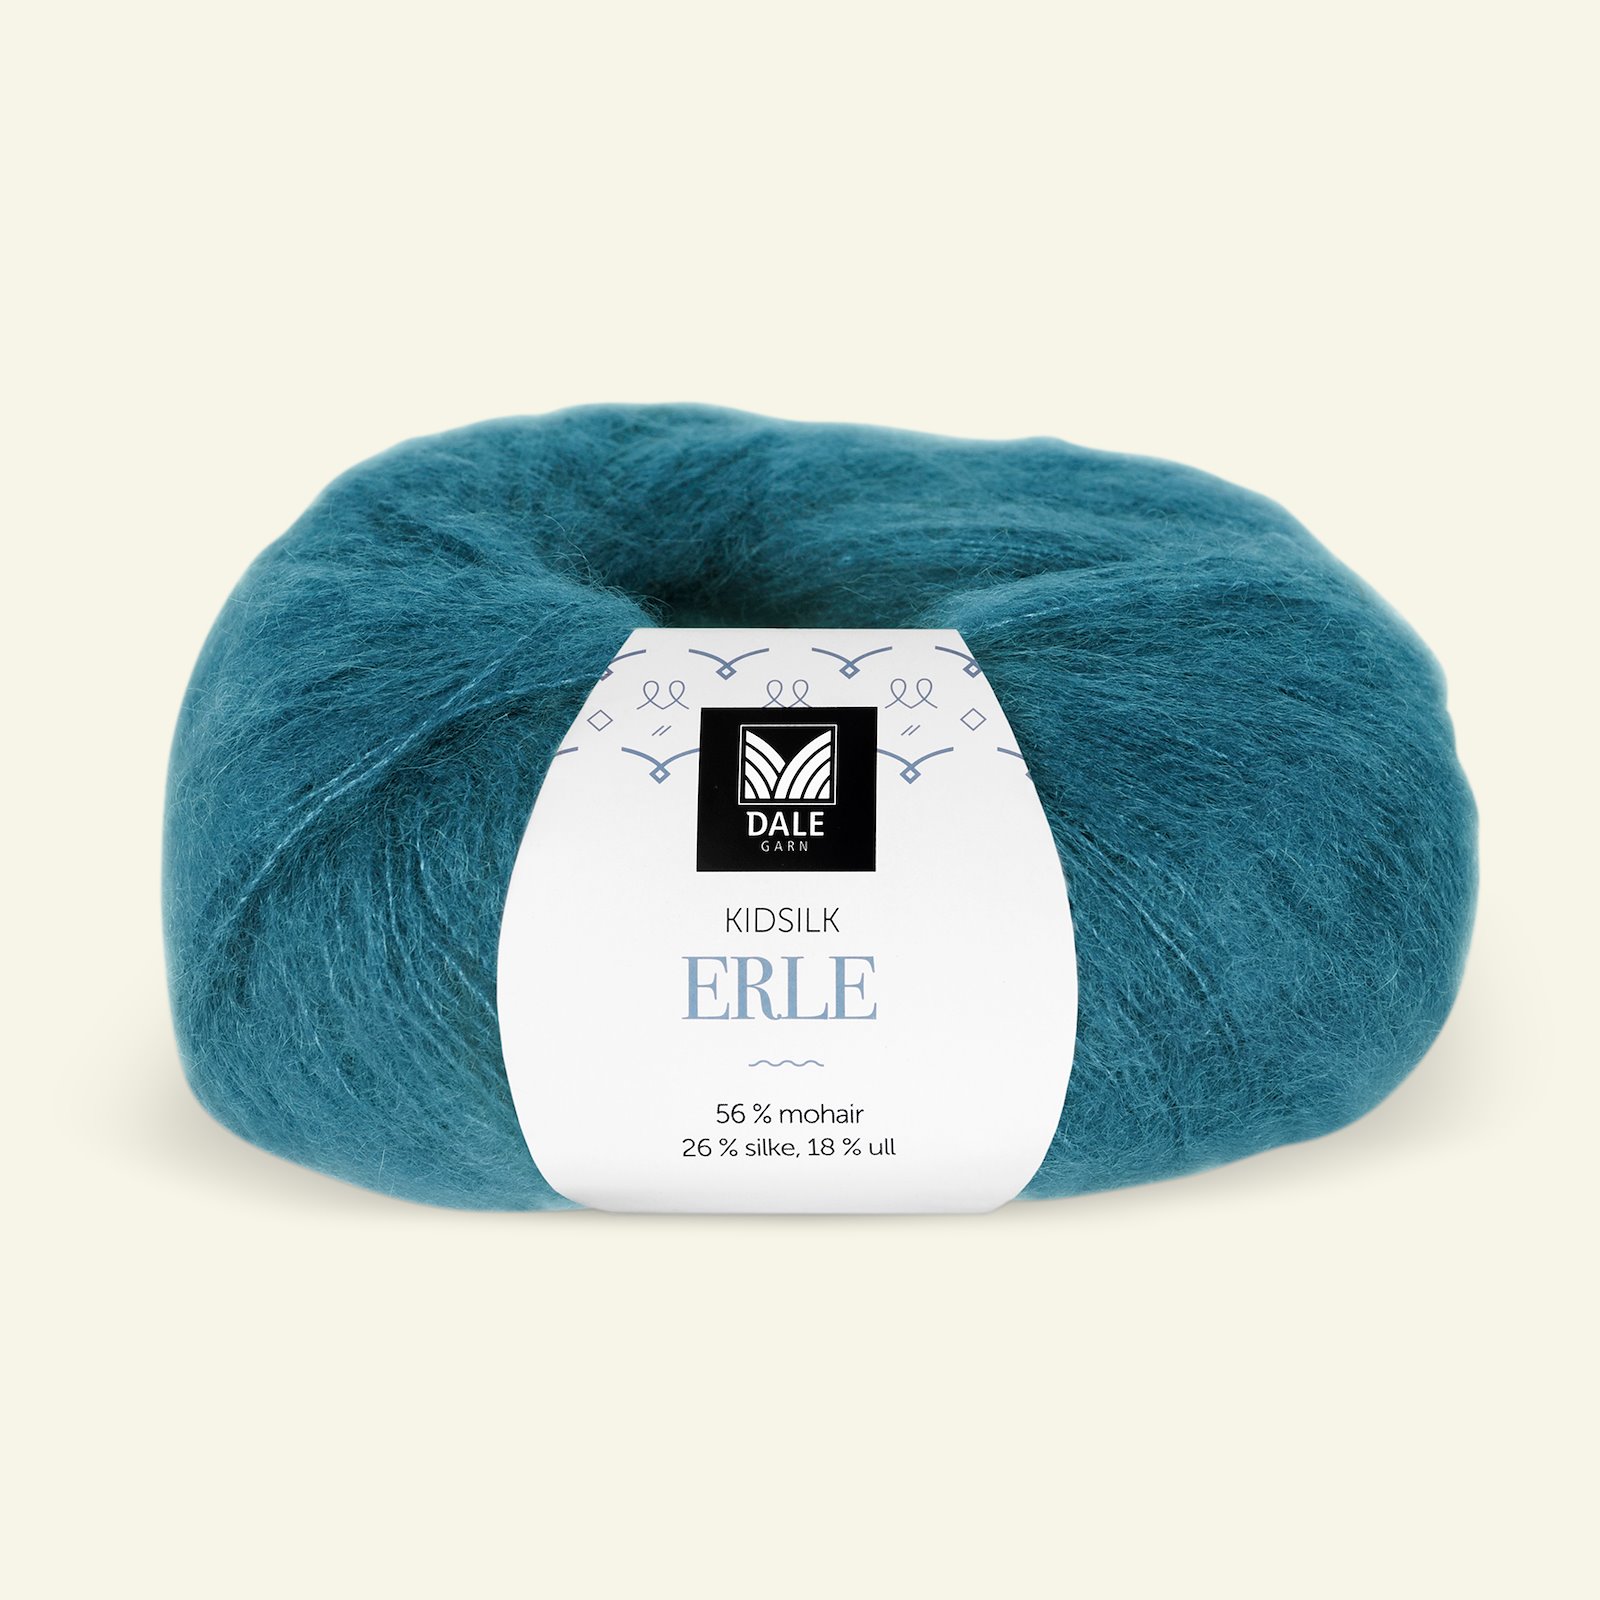 Dale Garn, silk mohair wool yarn "Kidsilk Erle", dark green (6054) 90000782_pack